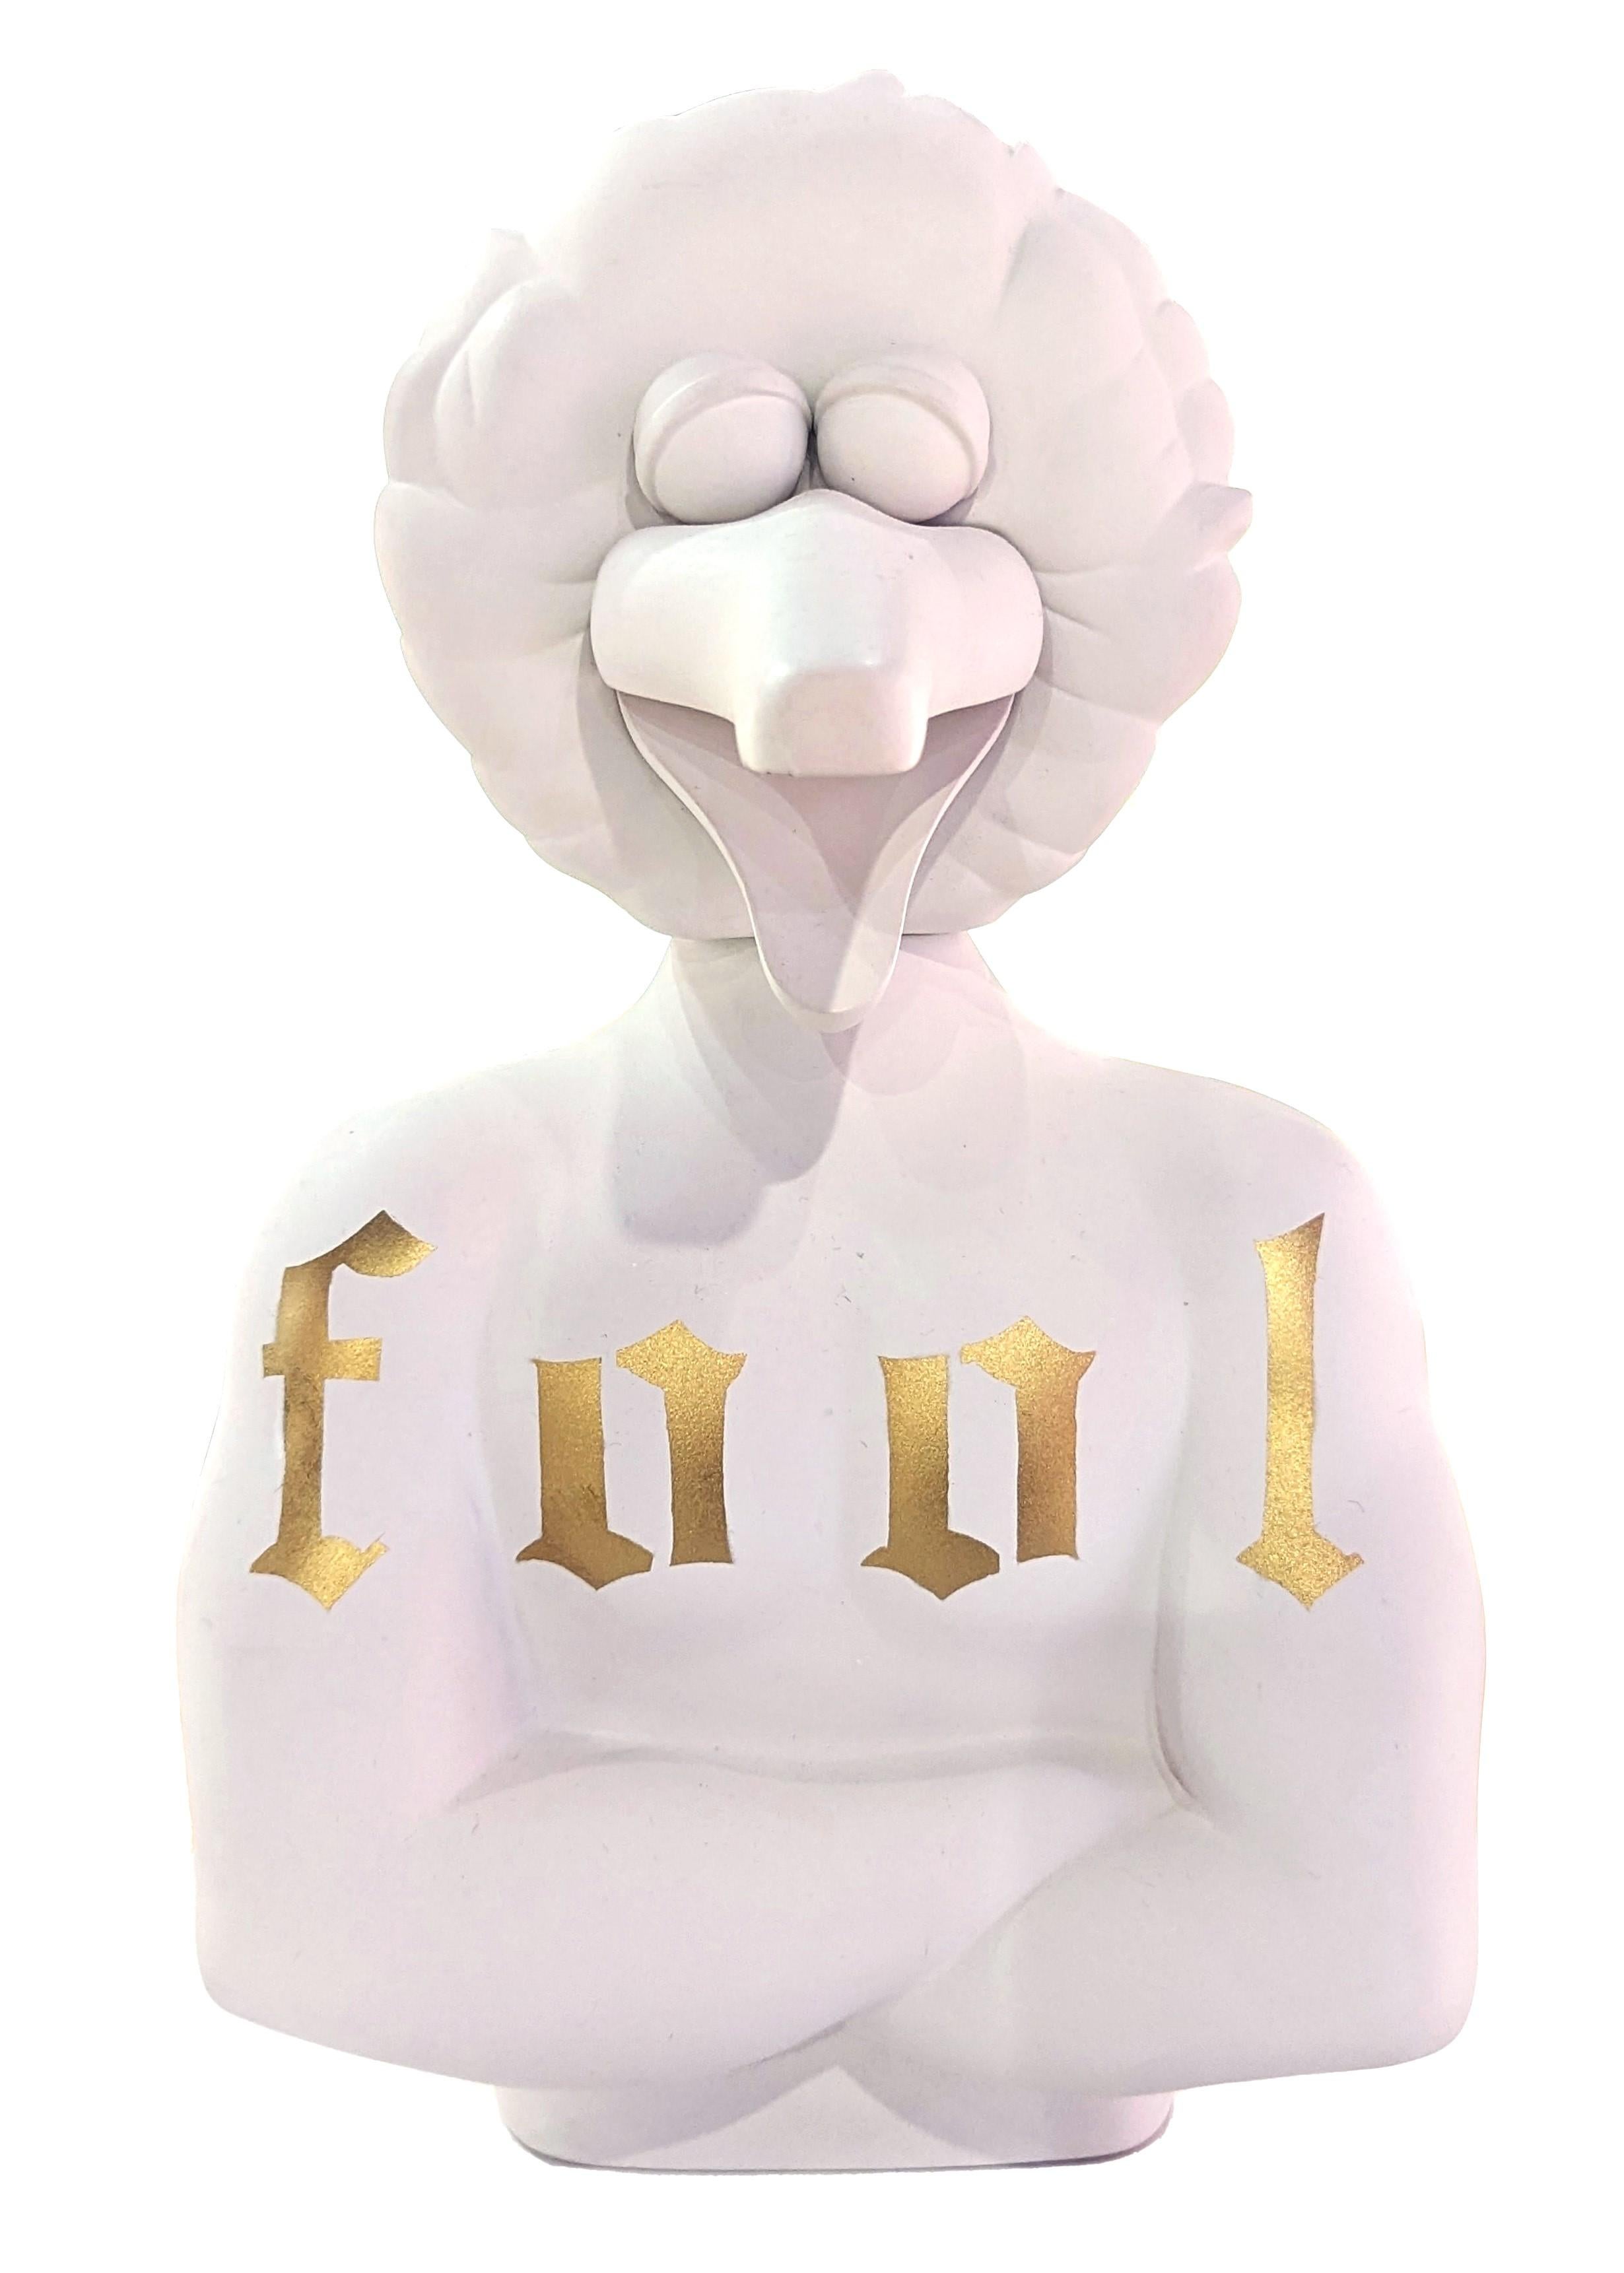 Pablo Garcia Figurative Sculpture - “Big Bad Bird” Contemporary Resin Pop Culture Sesame Street Character Sculpture